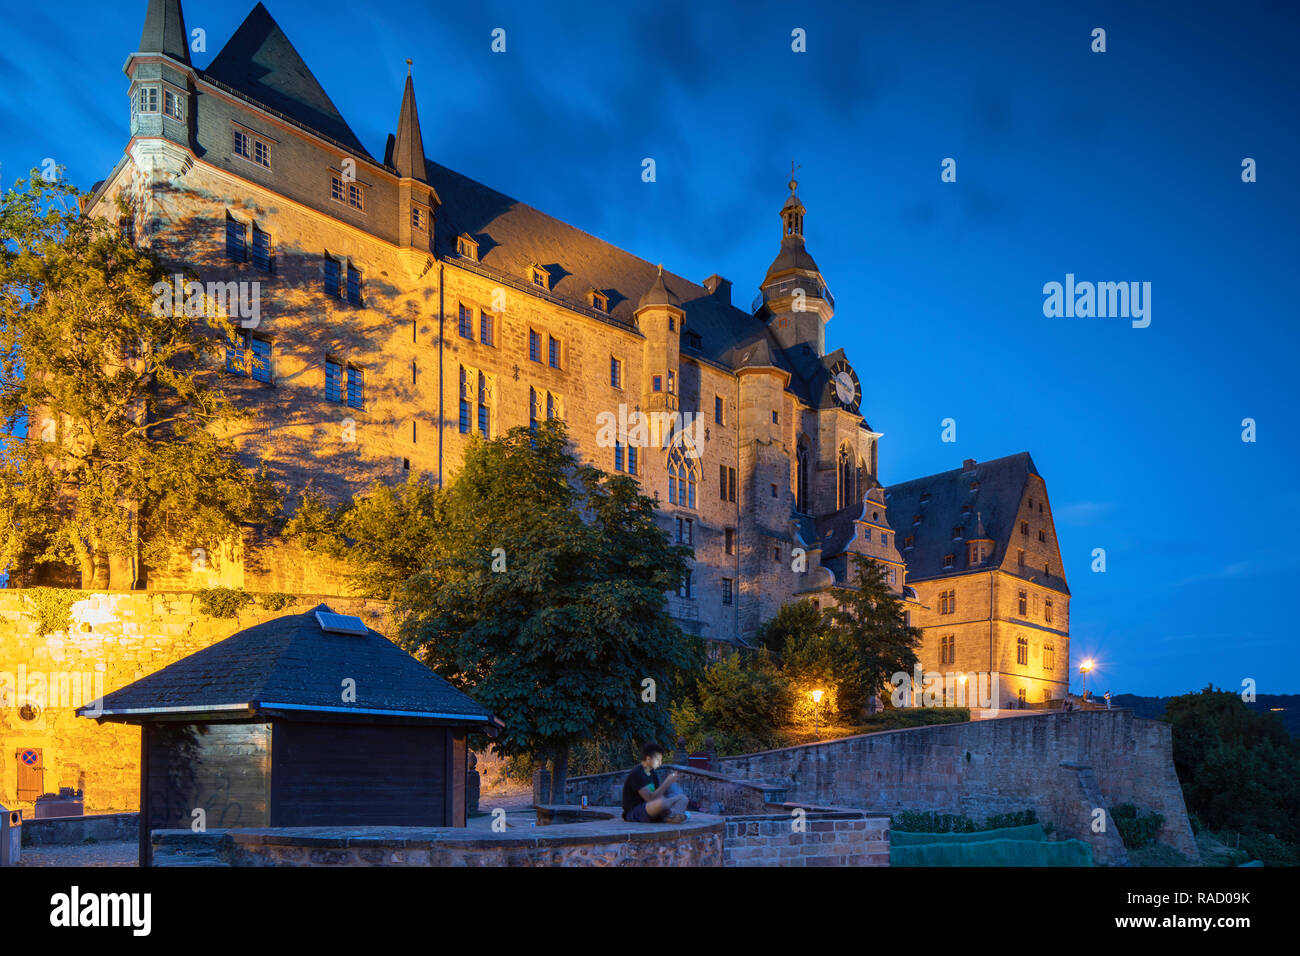 Landgrafenschloss (Marburg Castle) at dusk, Marburg, Hesse, Germany, Europe Stock Photo